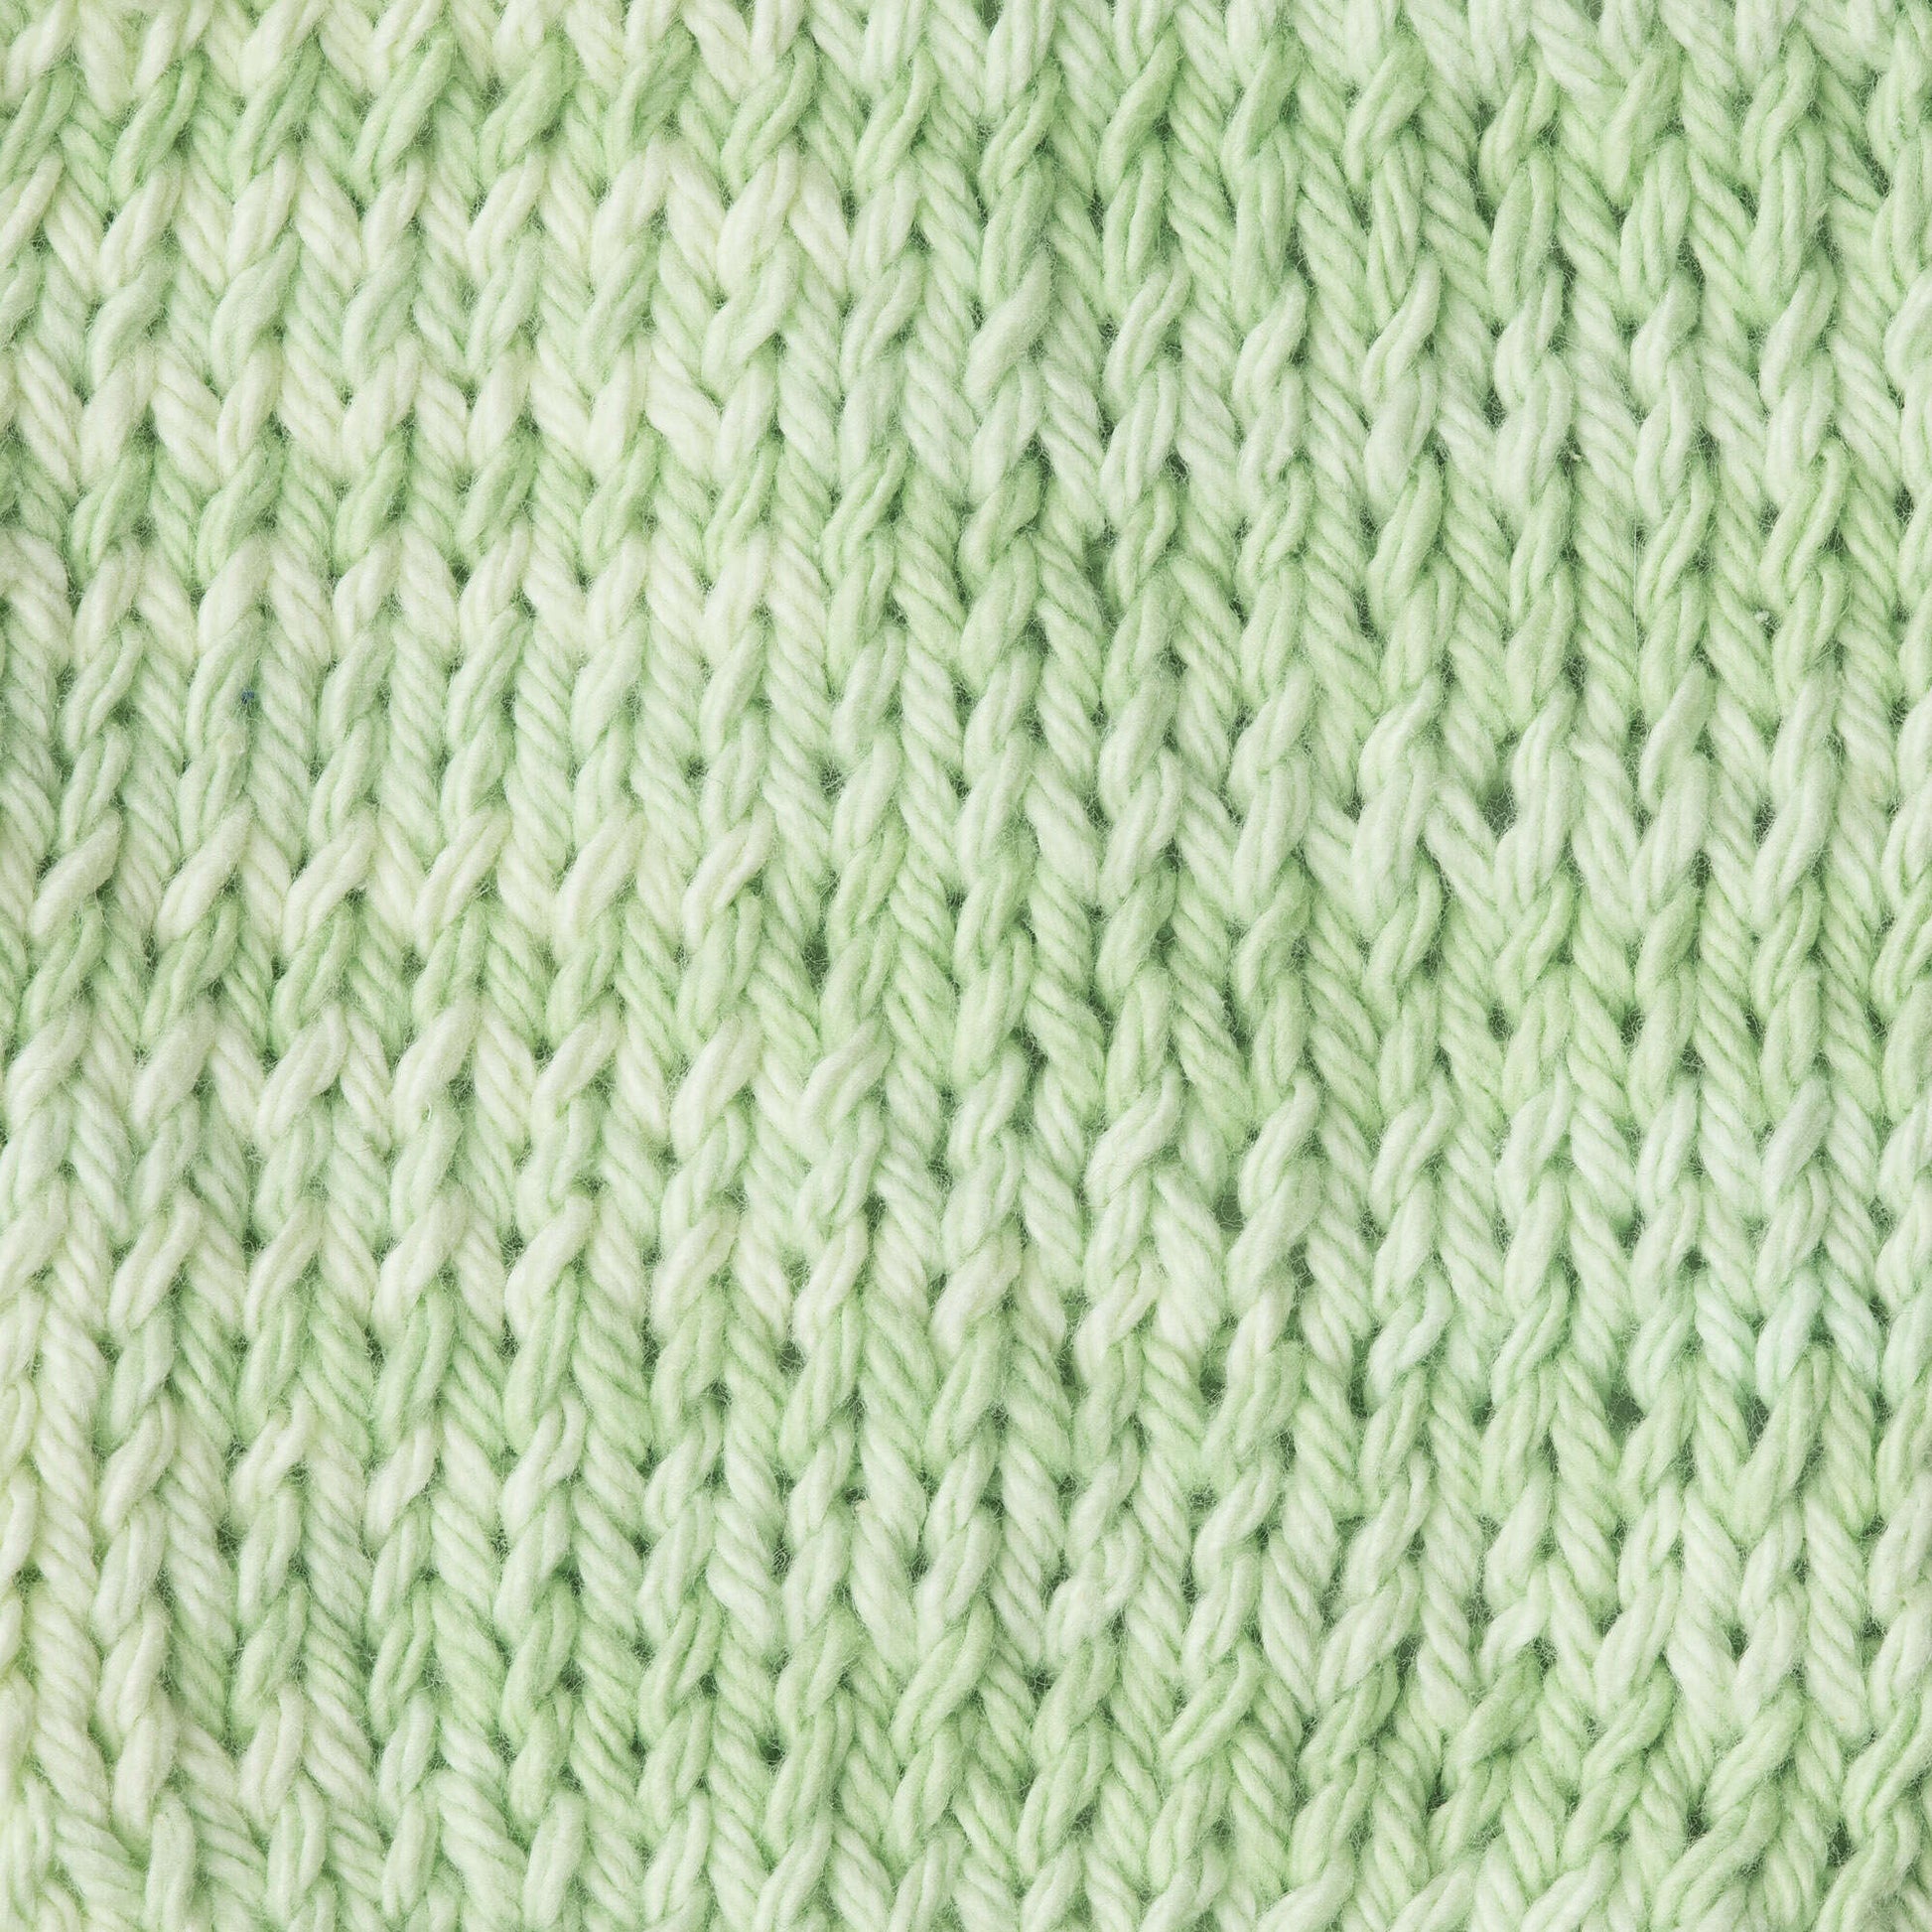 Bernat Handicrafter Cotton Scents Yarn - Discontinued Shades